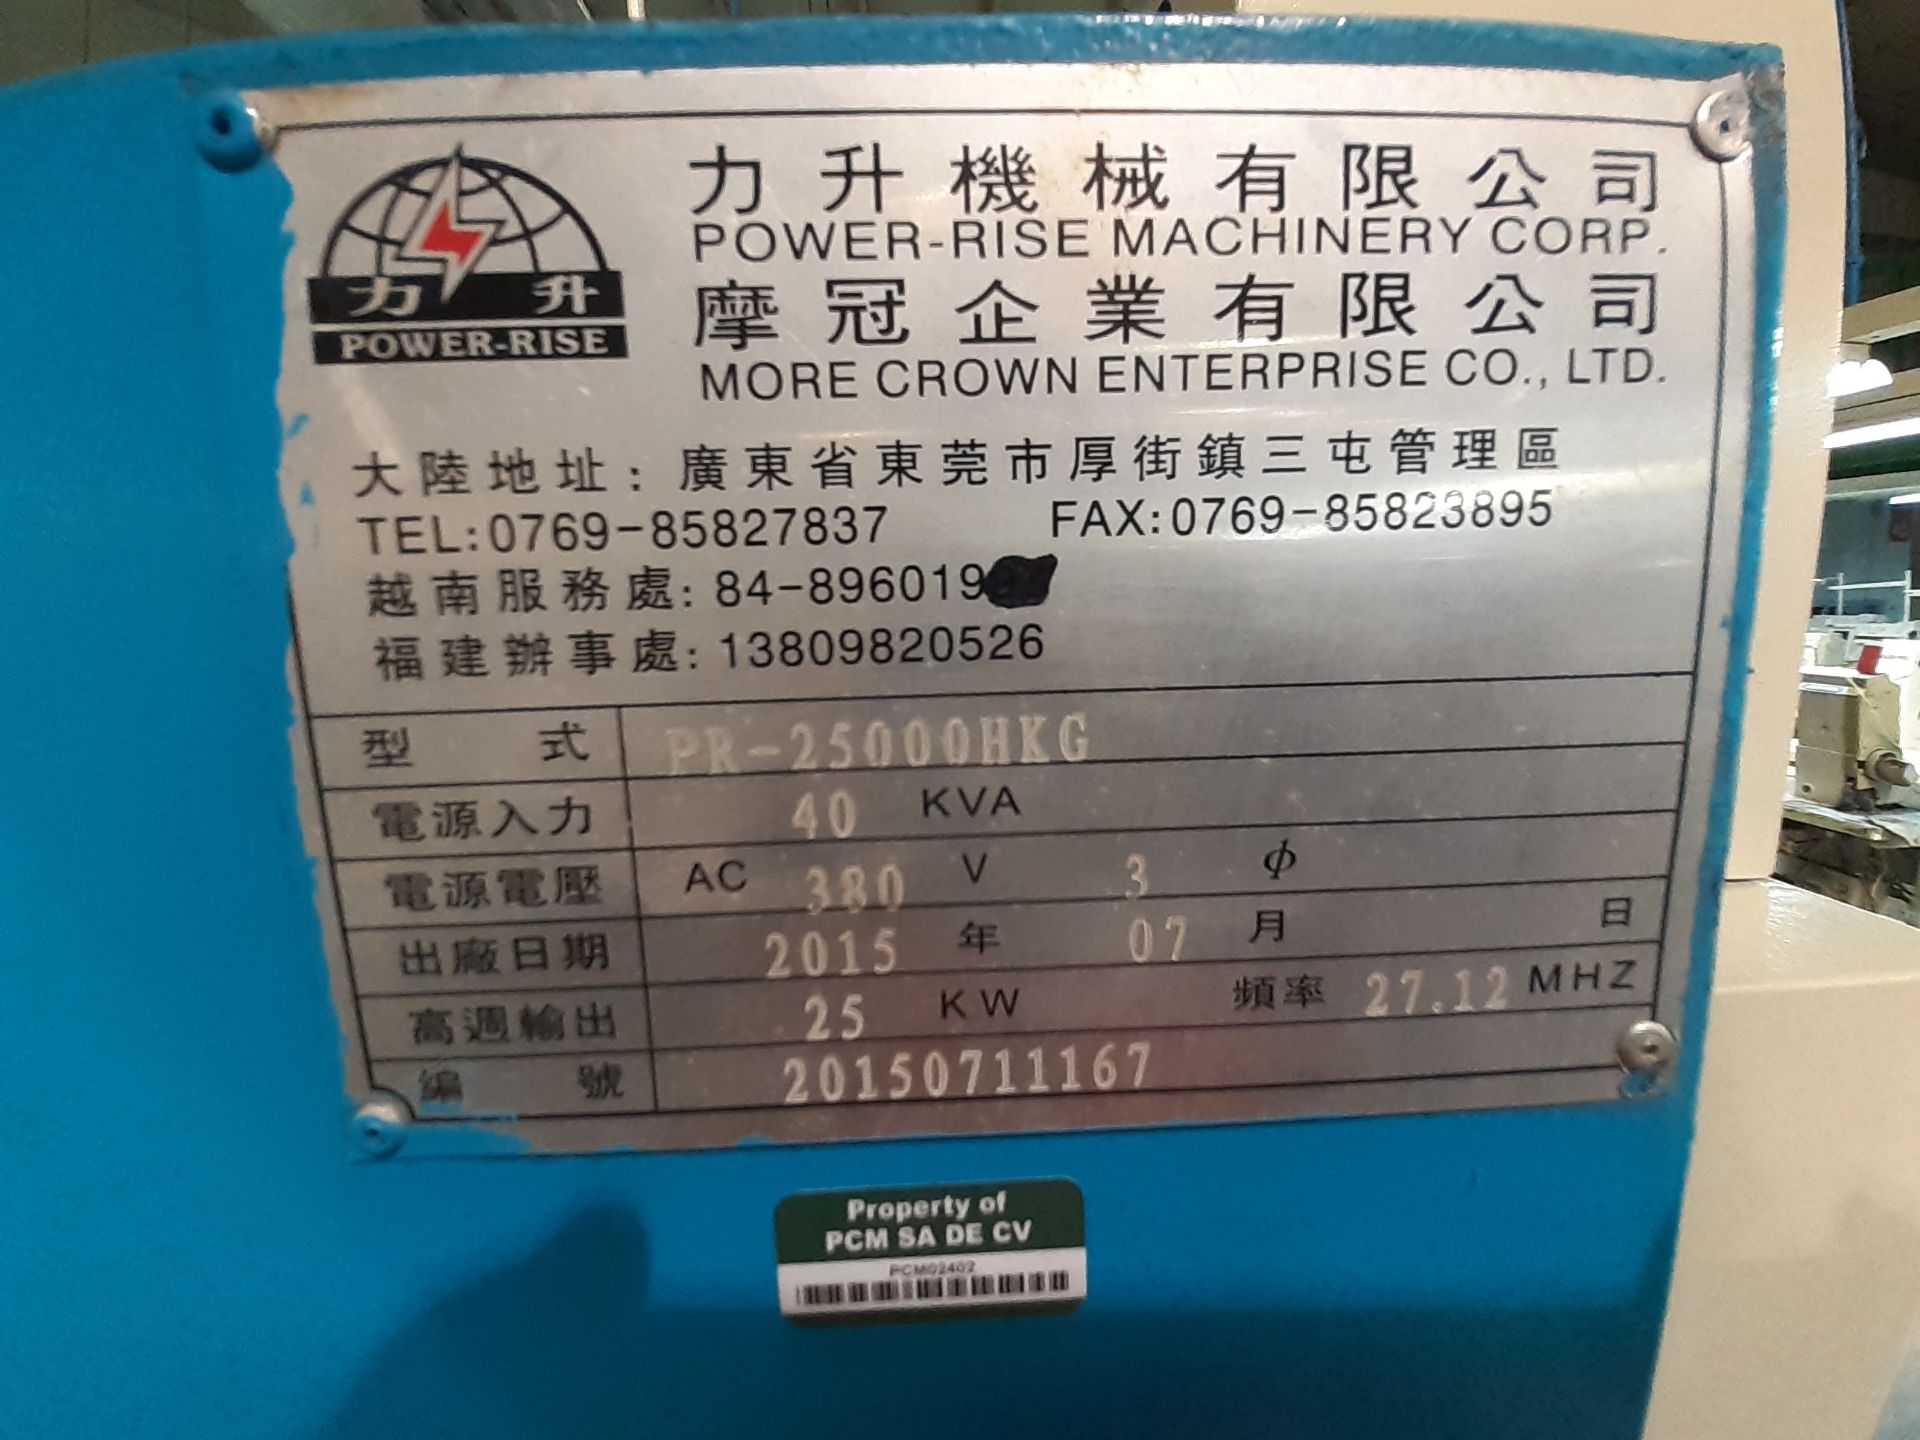 Máquina de soldadura de alta frecuencia marca Power-Rise, Modelo: PR-25000HKG - Image 15 of 16